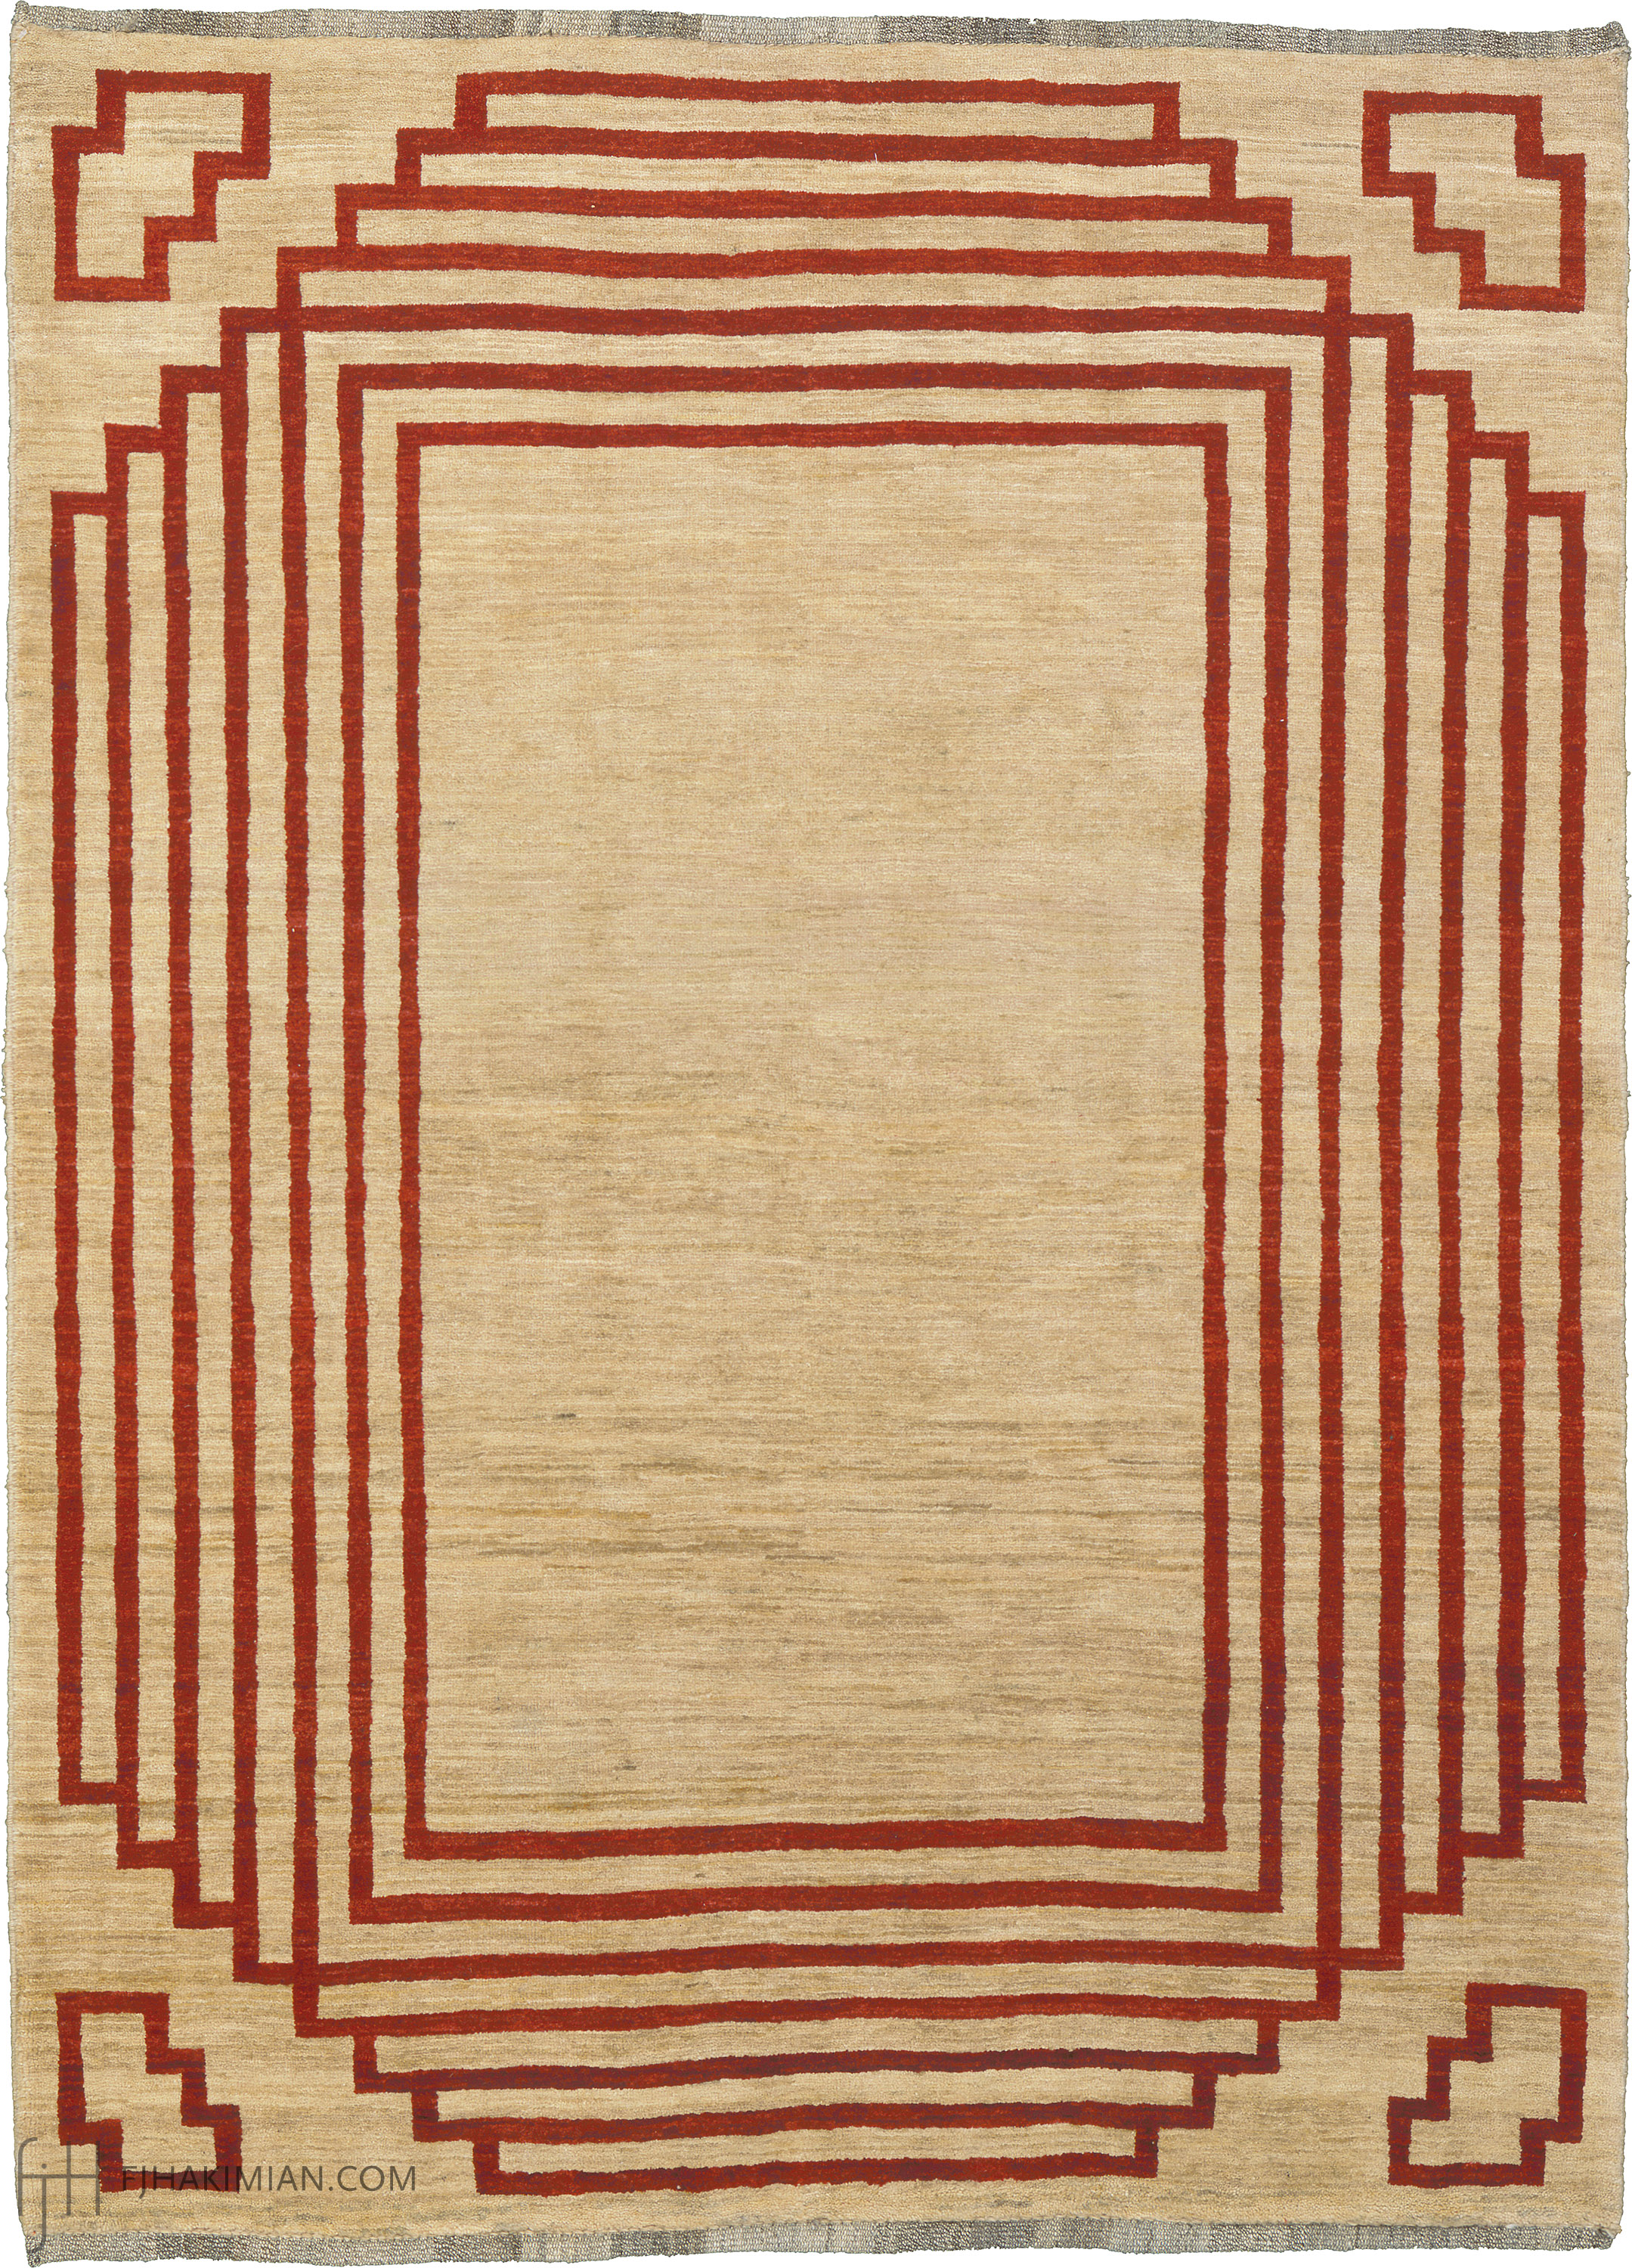  #16230 | Deco Border | Custom Modern Carpets | FJ Hakimian | Carpet Gallery in NY